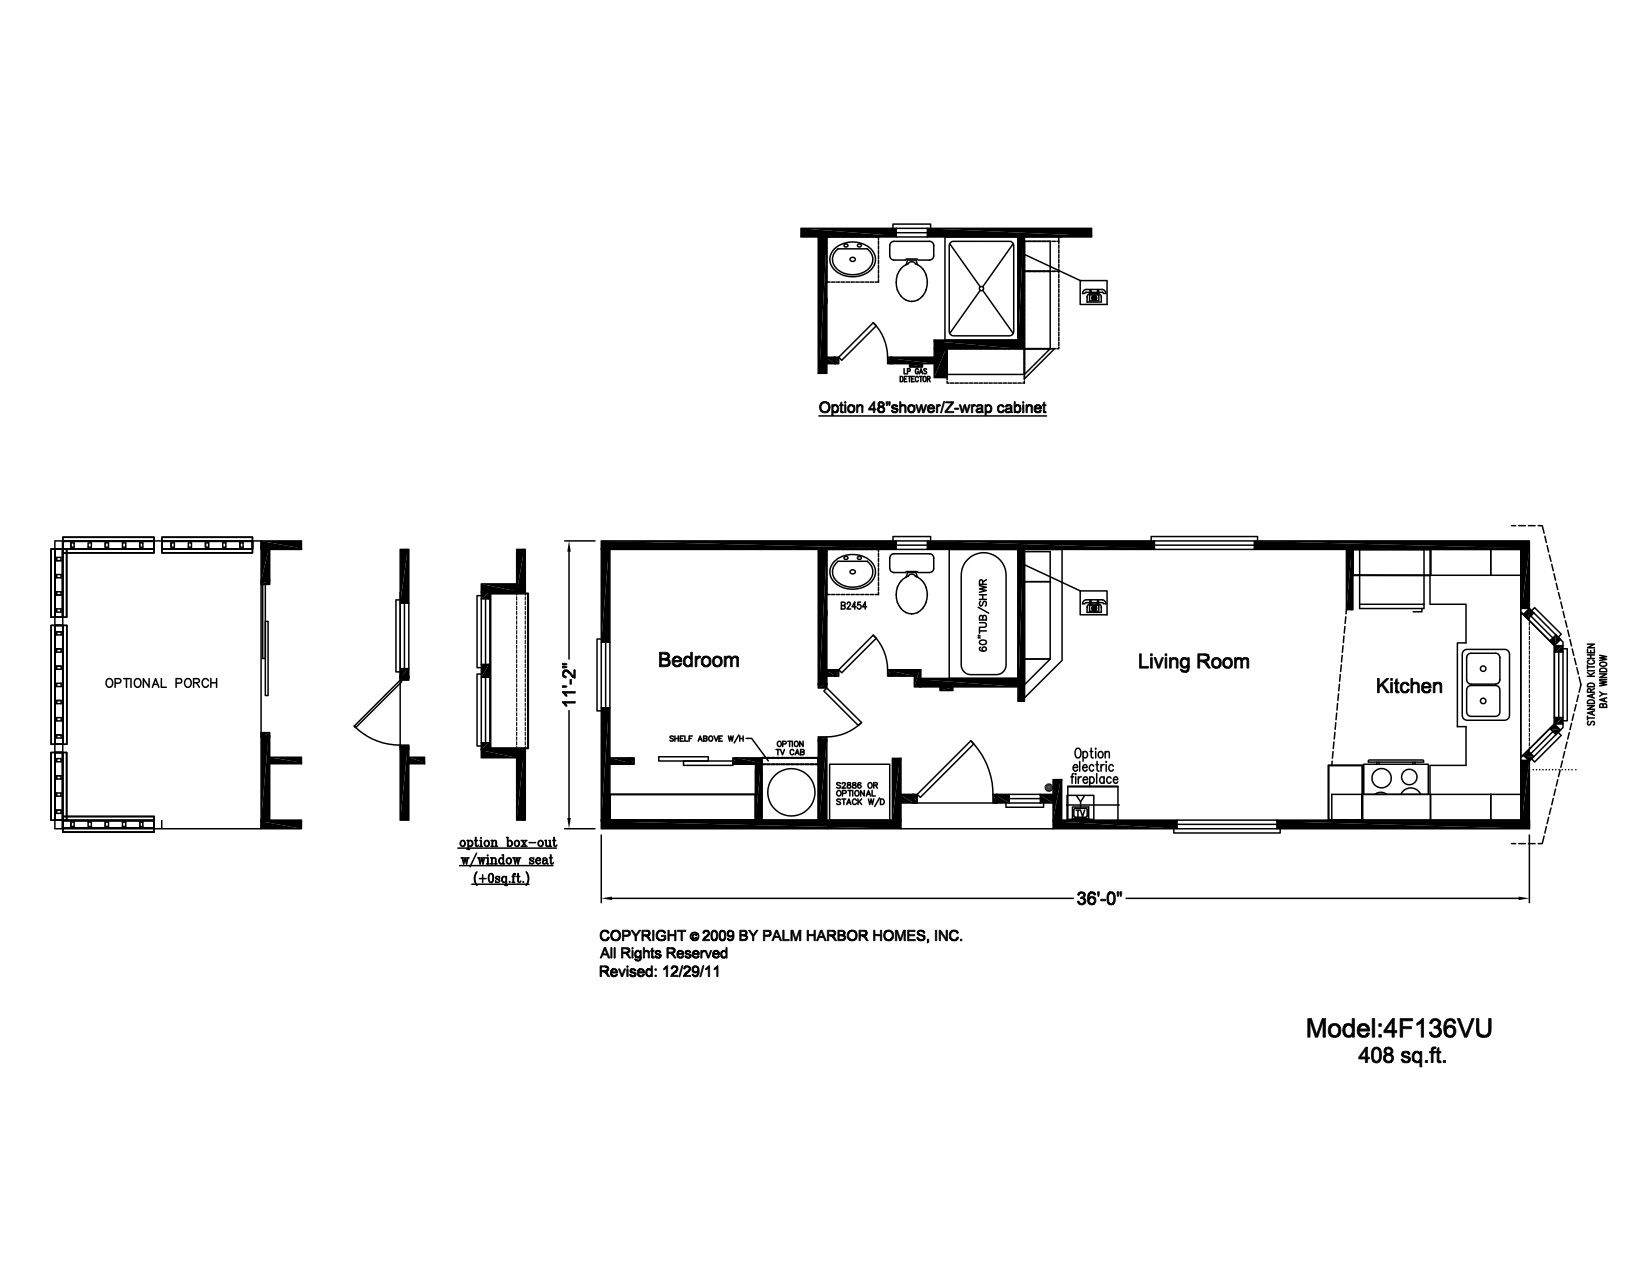 Homes Direct Modular Homes - Model 4F136VU - Floorplan